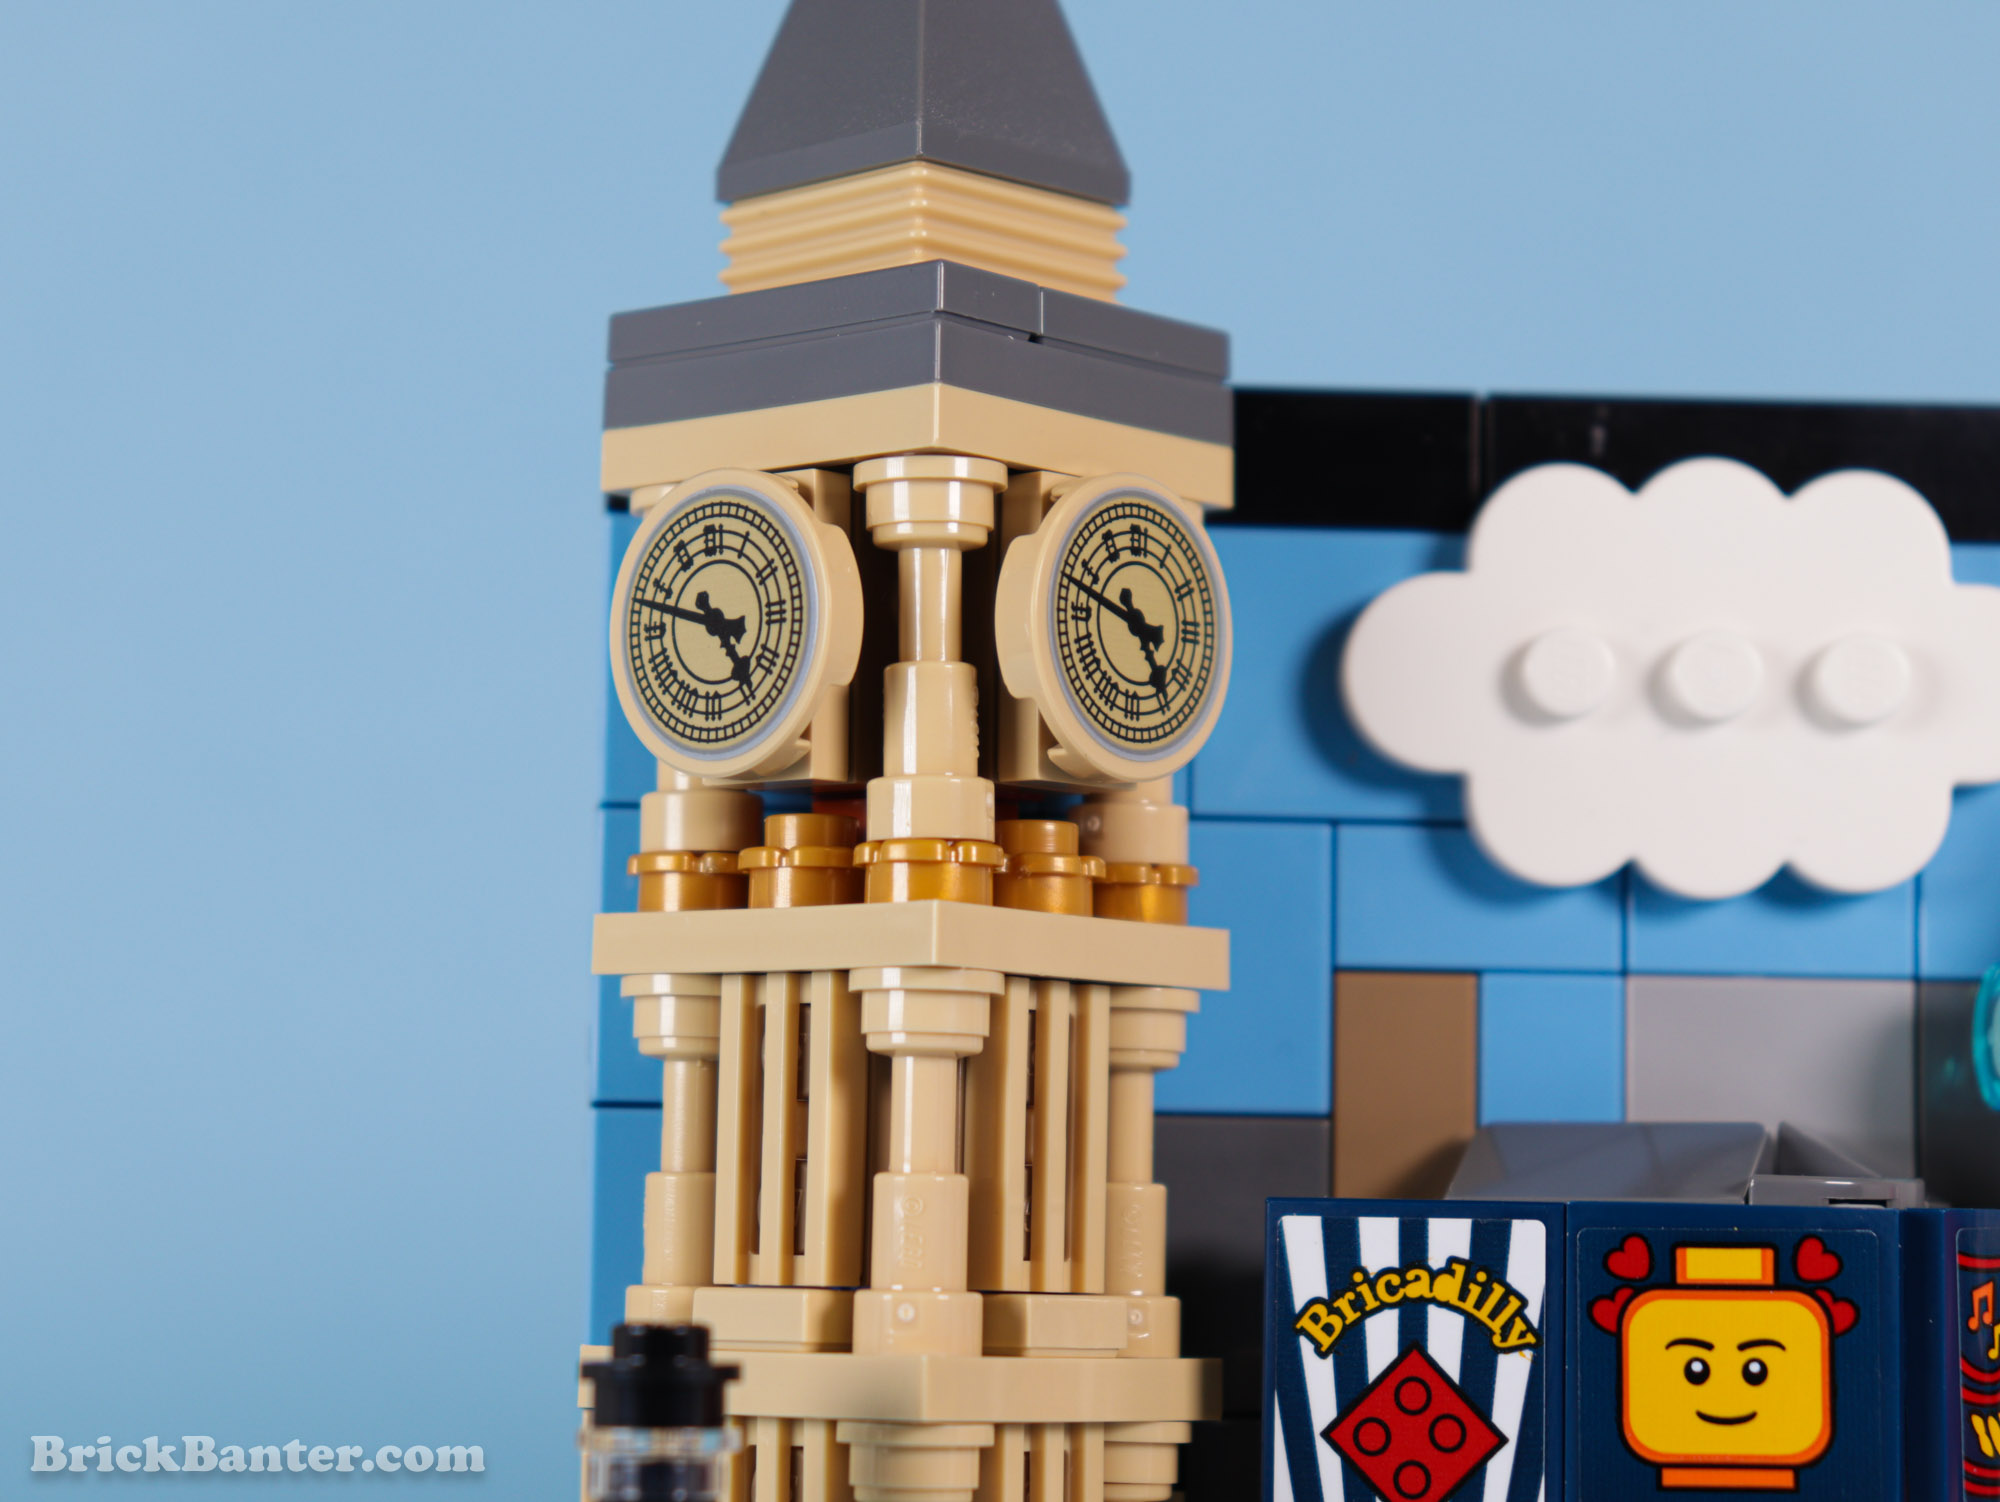 LEGO 40569 - London Postcard  - Creator Theme - New Release Brick Banter Review